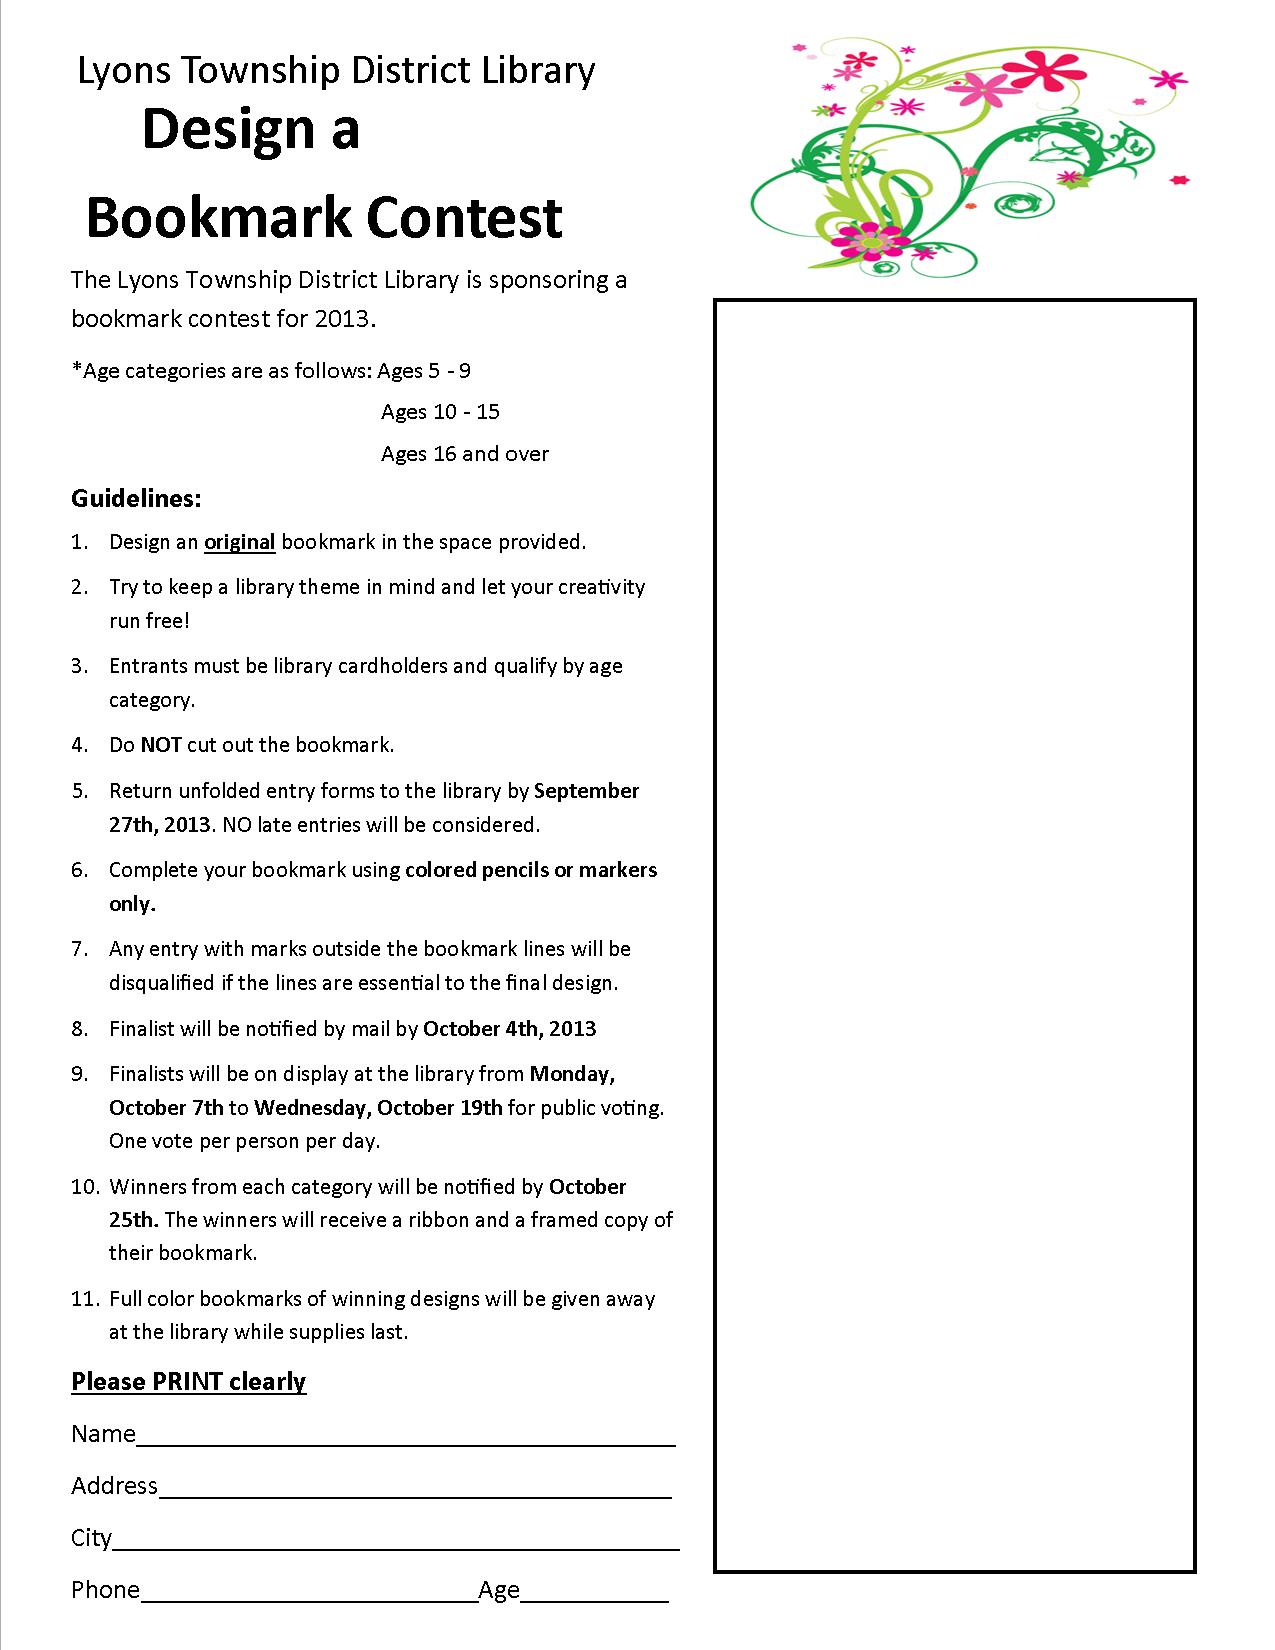 Bookmark Contest2.jpg